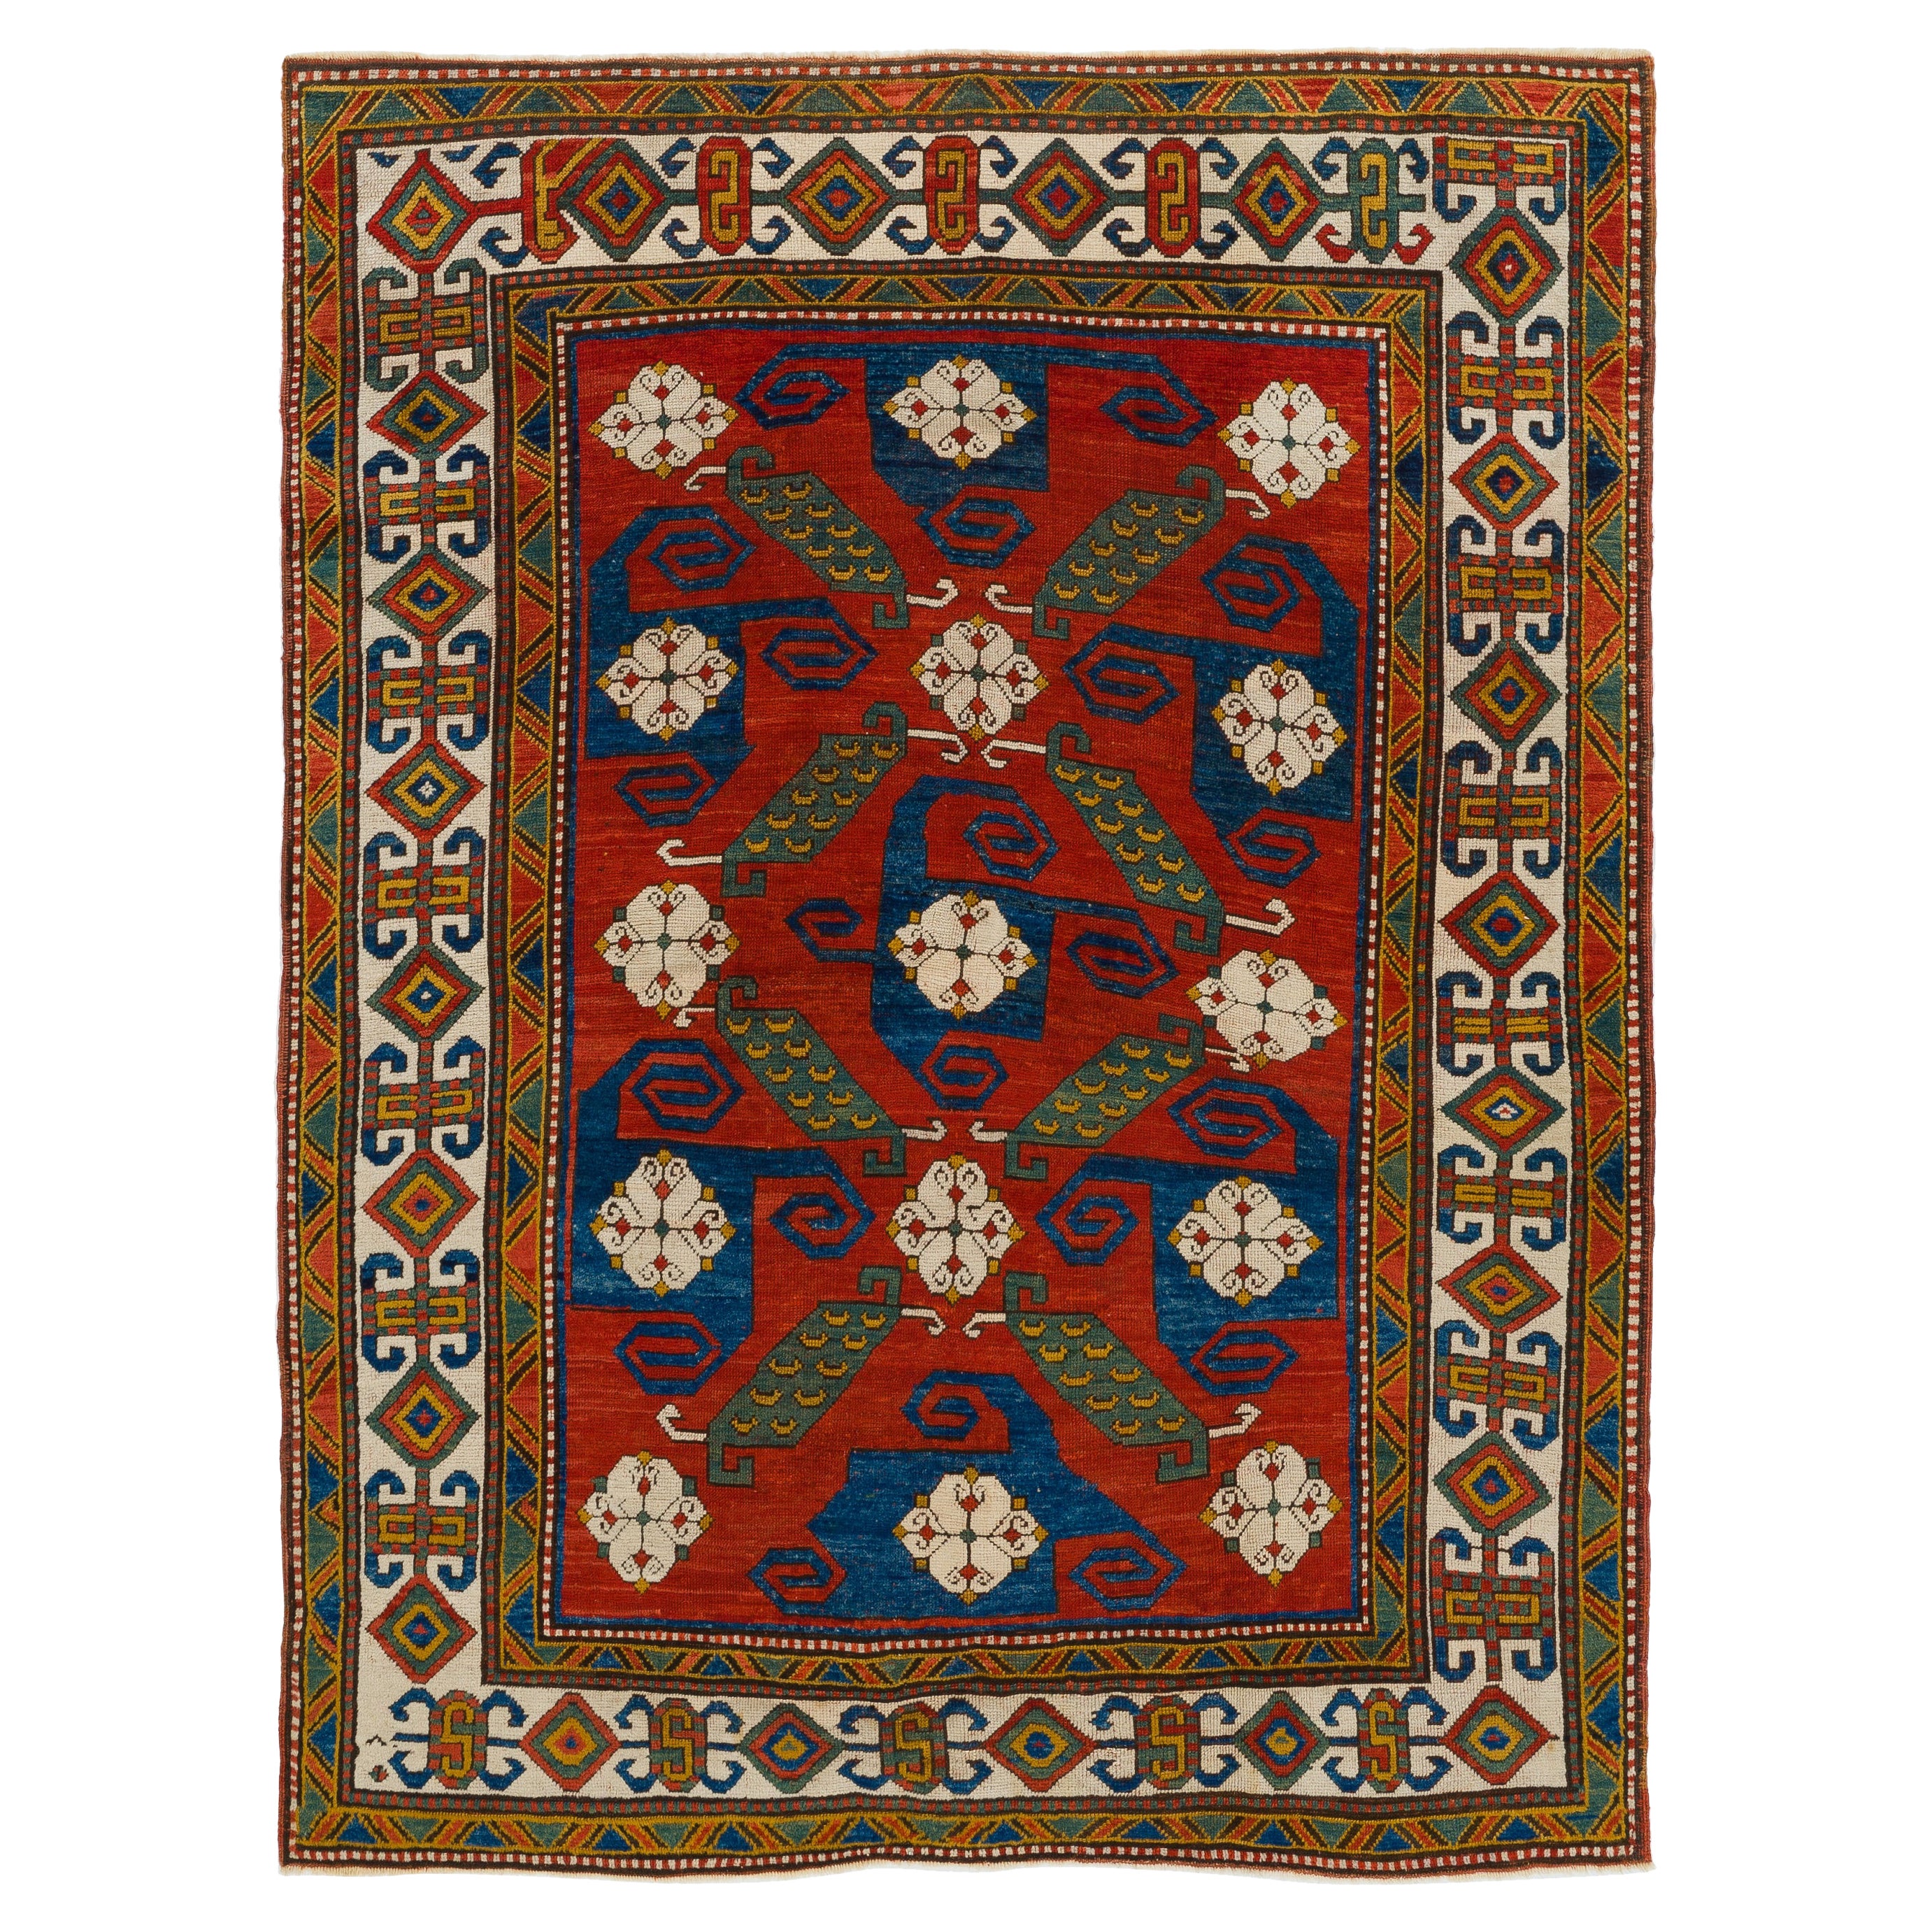 5'6"x7'2" Antique Caucasian Pinwheel Kazak Rug. Top Shelf Collectors Carpet